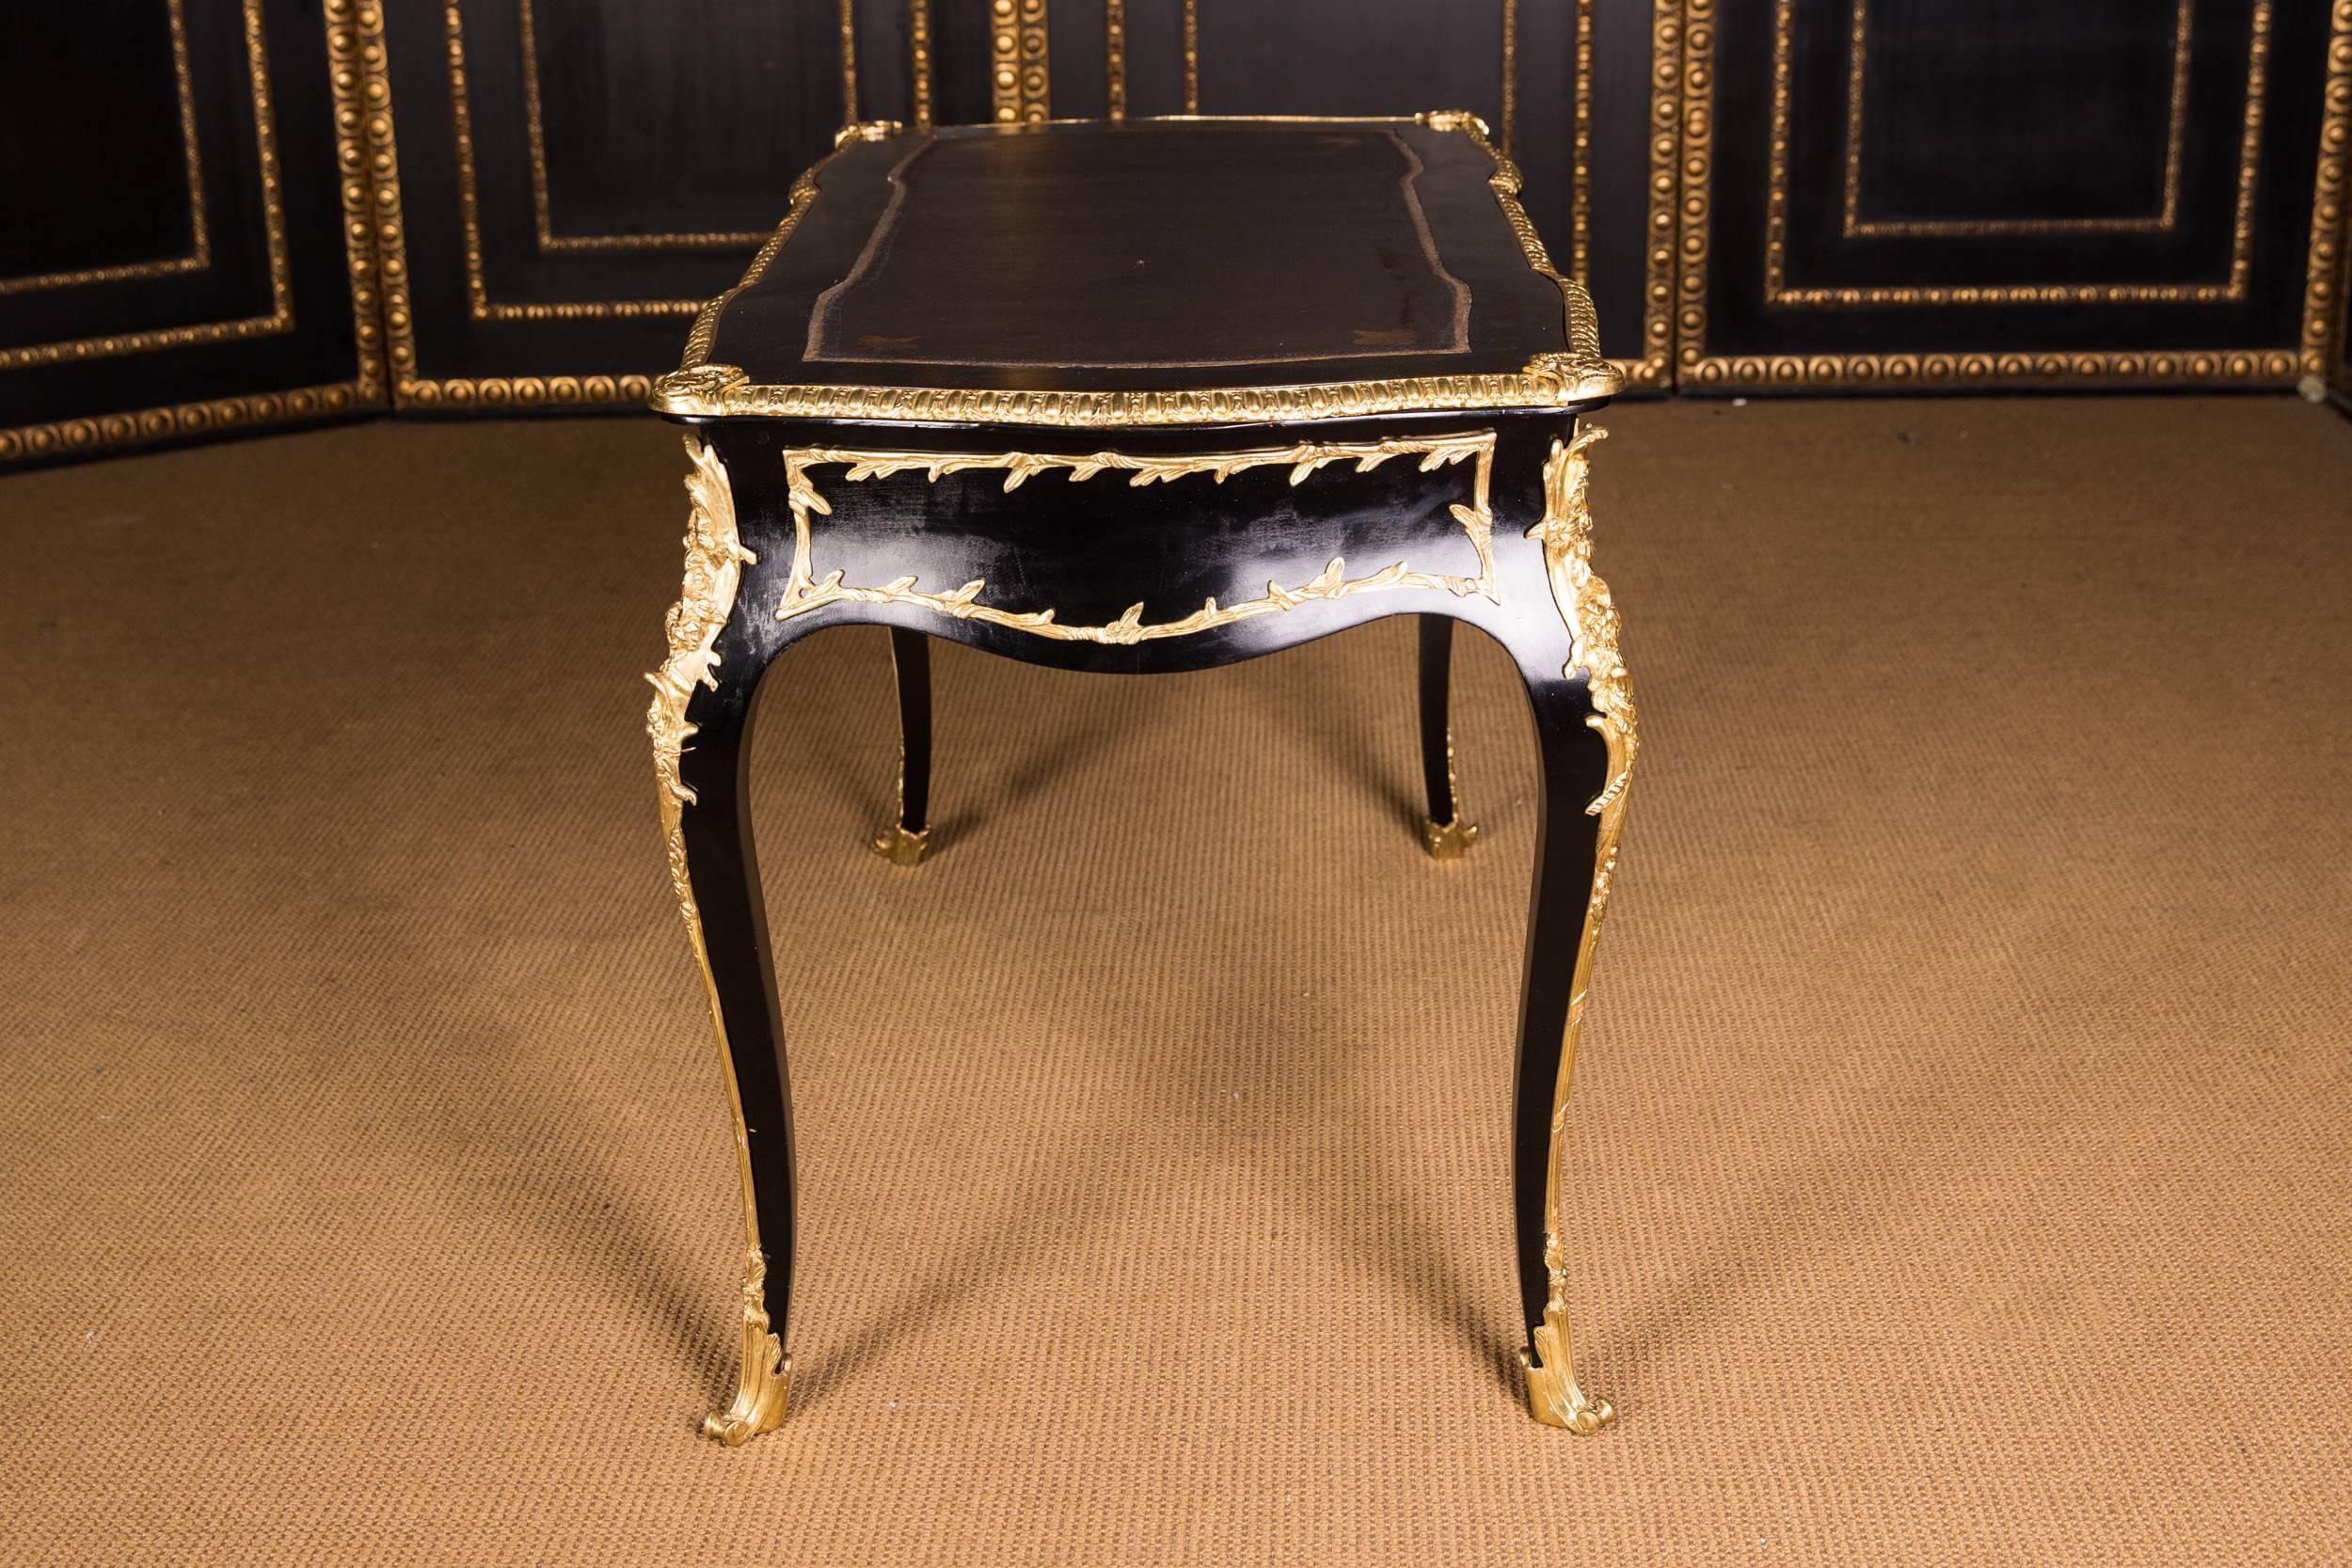 20th Century French Bureau Plat Desk in the Louis XV Style Black Ebonized Veneer 3